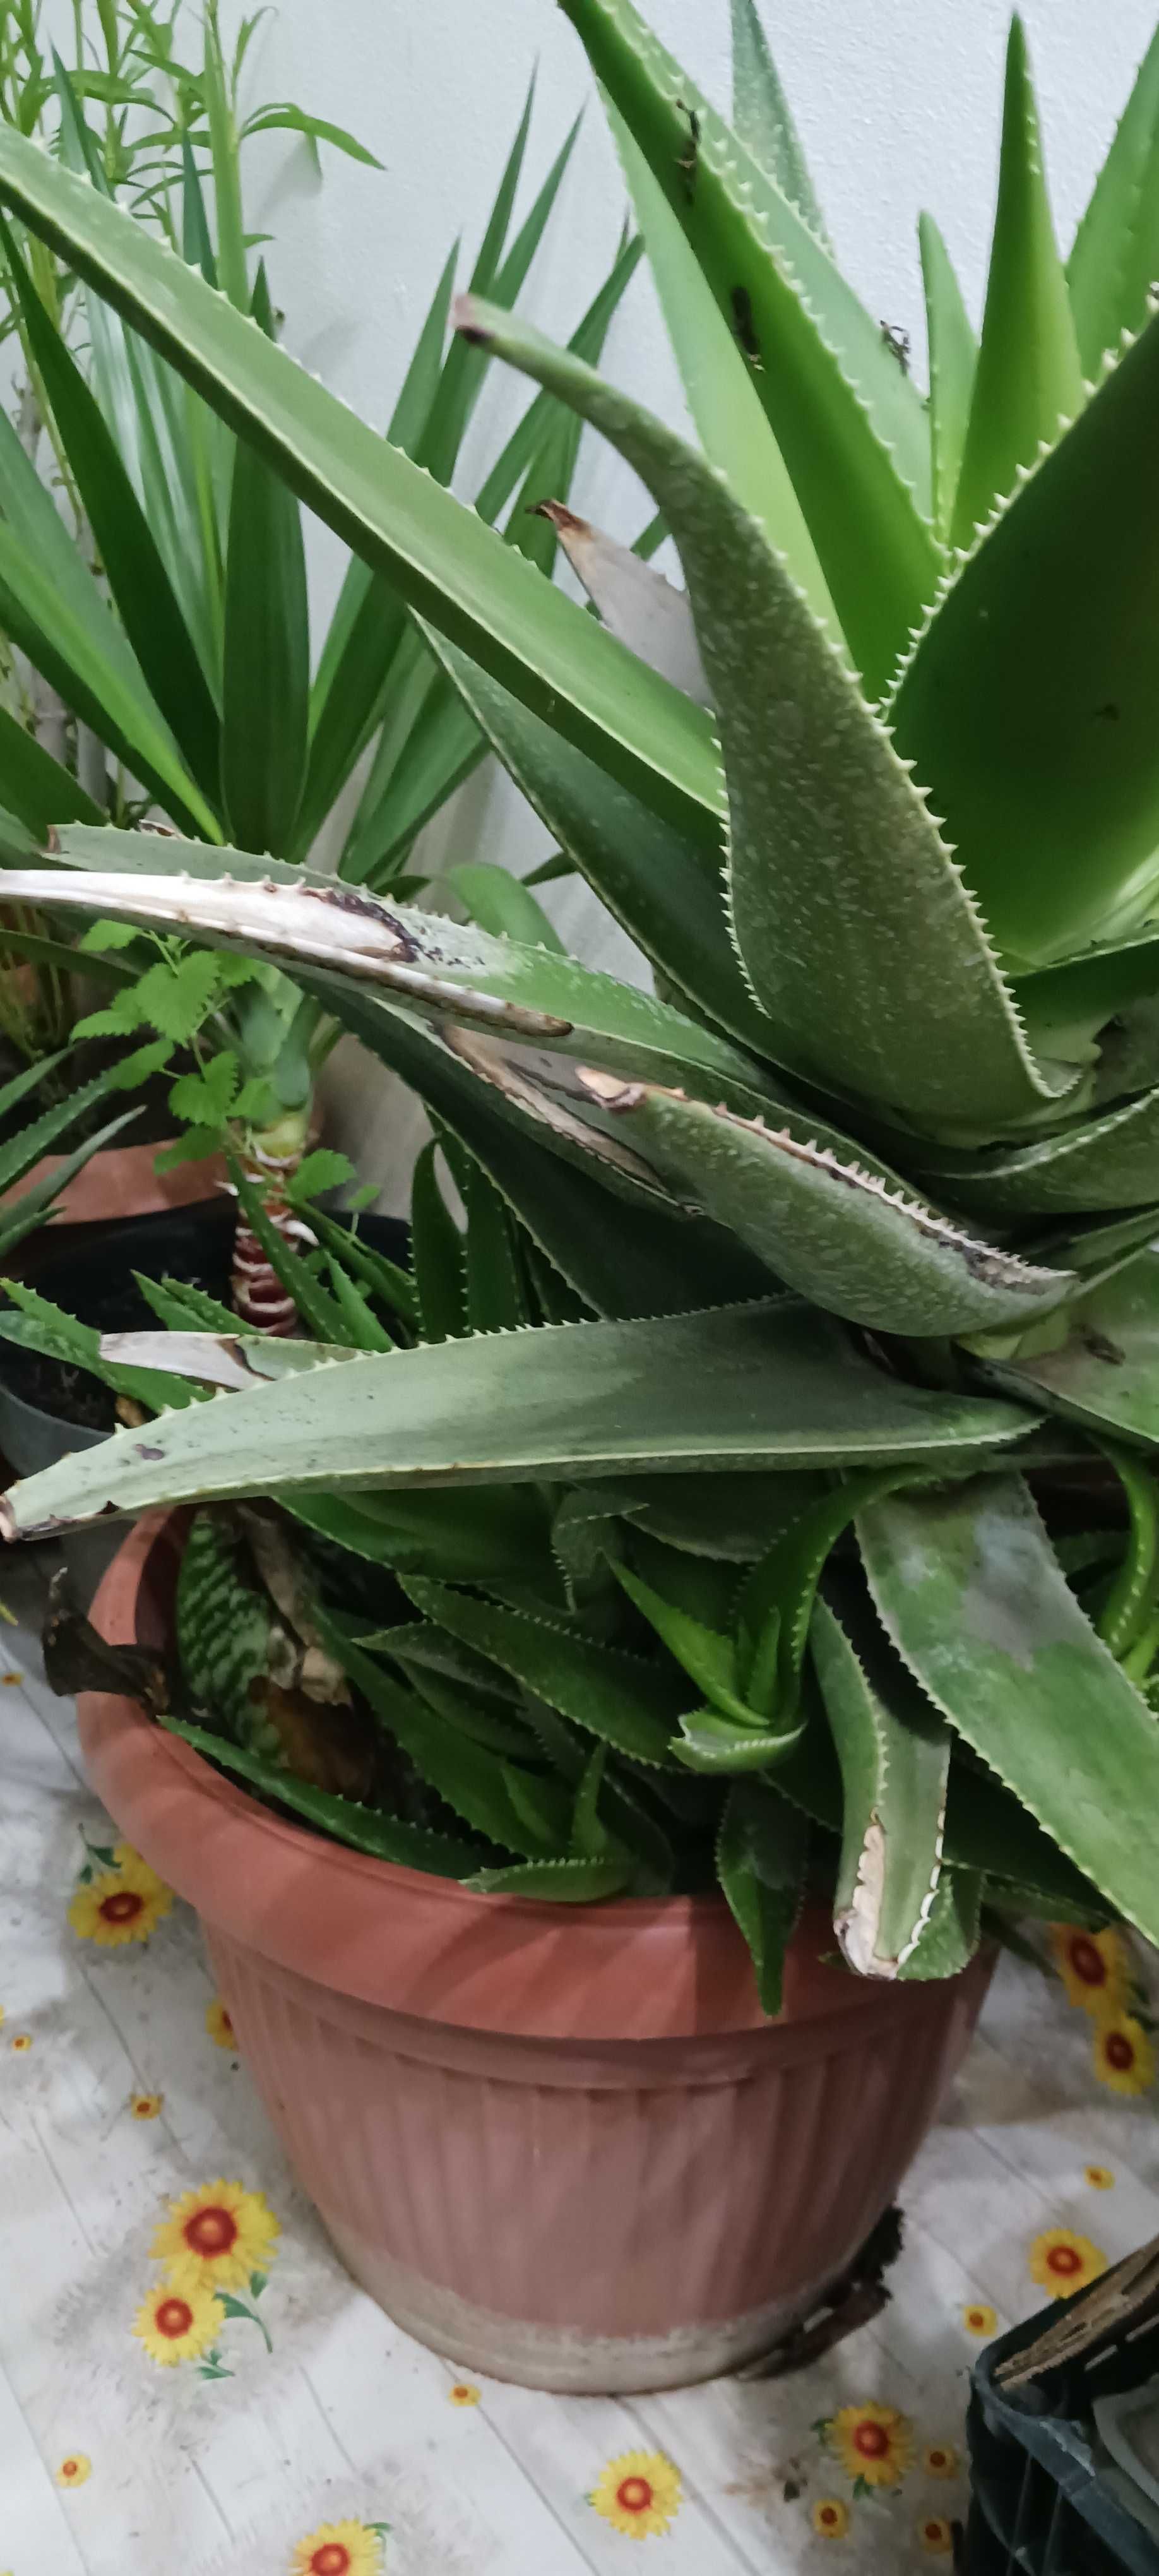 Vând plante Aloe Vera diferite dimensiuni.